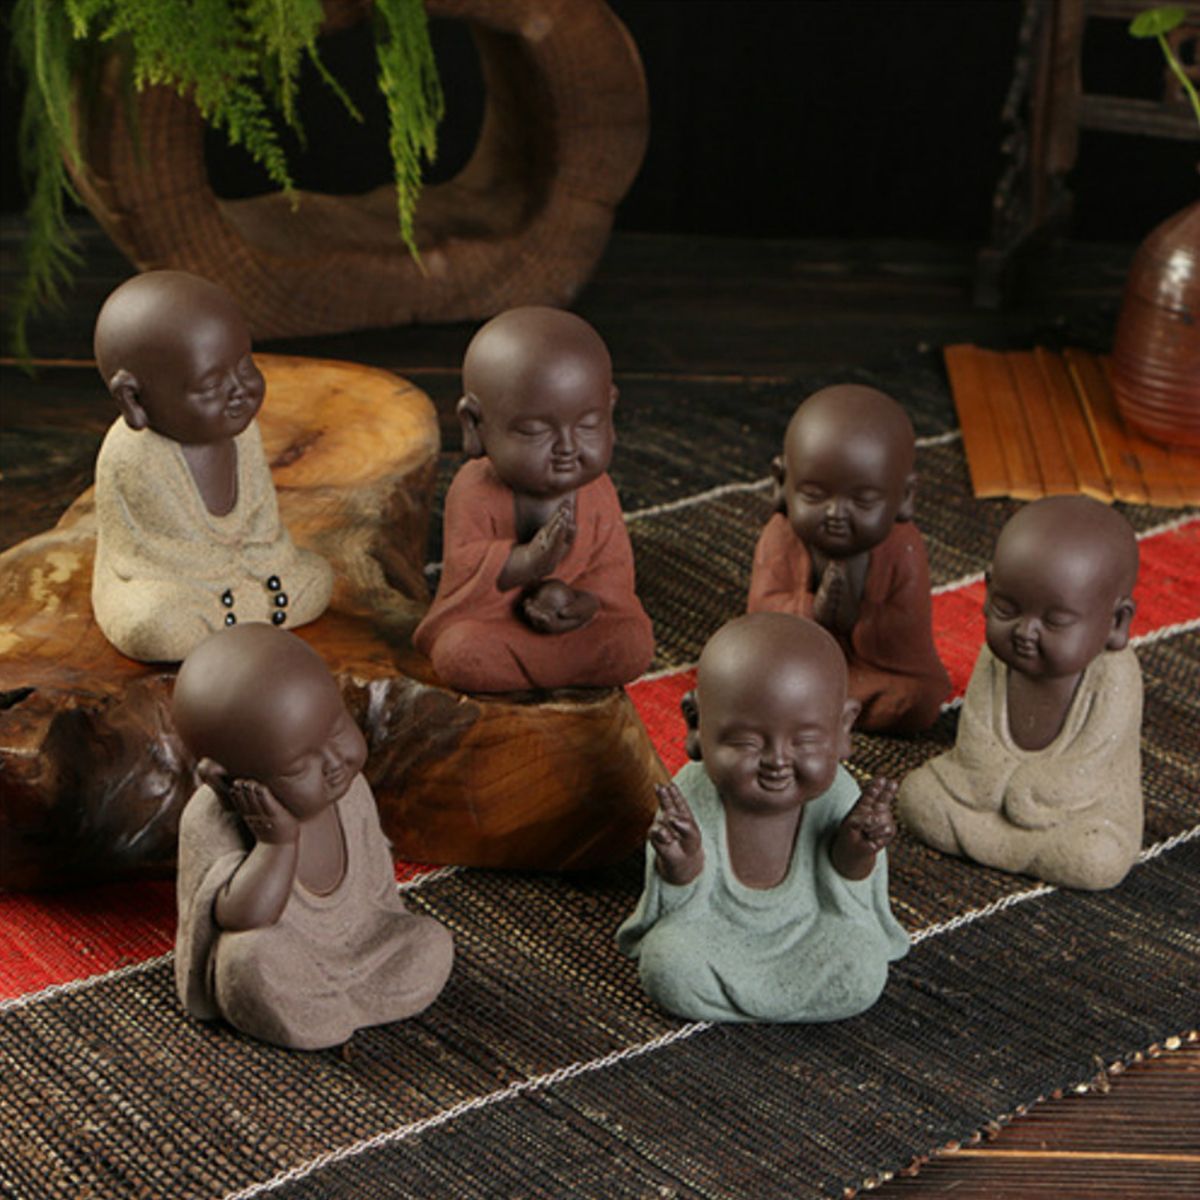 Cute-Little-Monk-Figurine-Statues-Tea-Pet-Home-Tea-Tray-Decorations-Ornament-Ceramic-Collectible-Hom-1550349